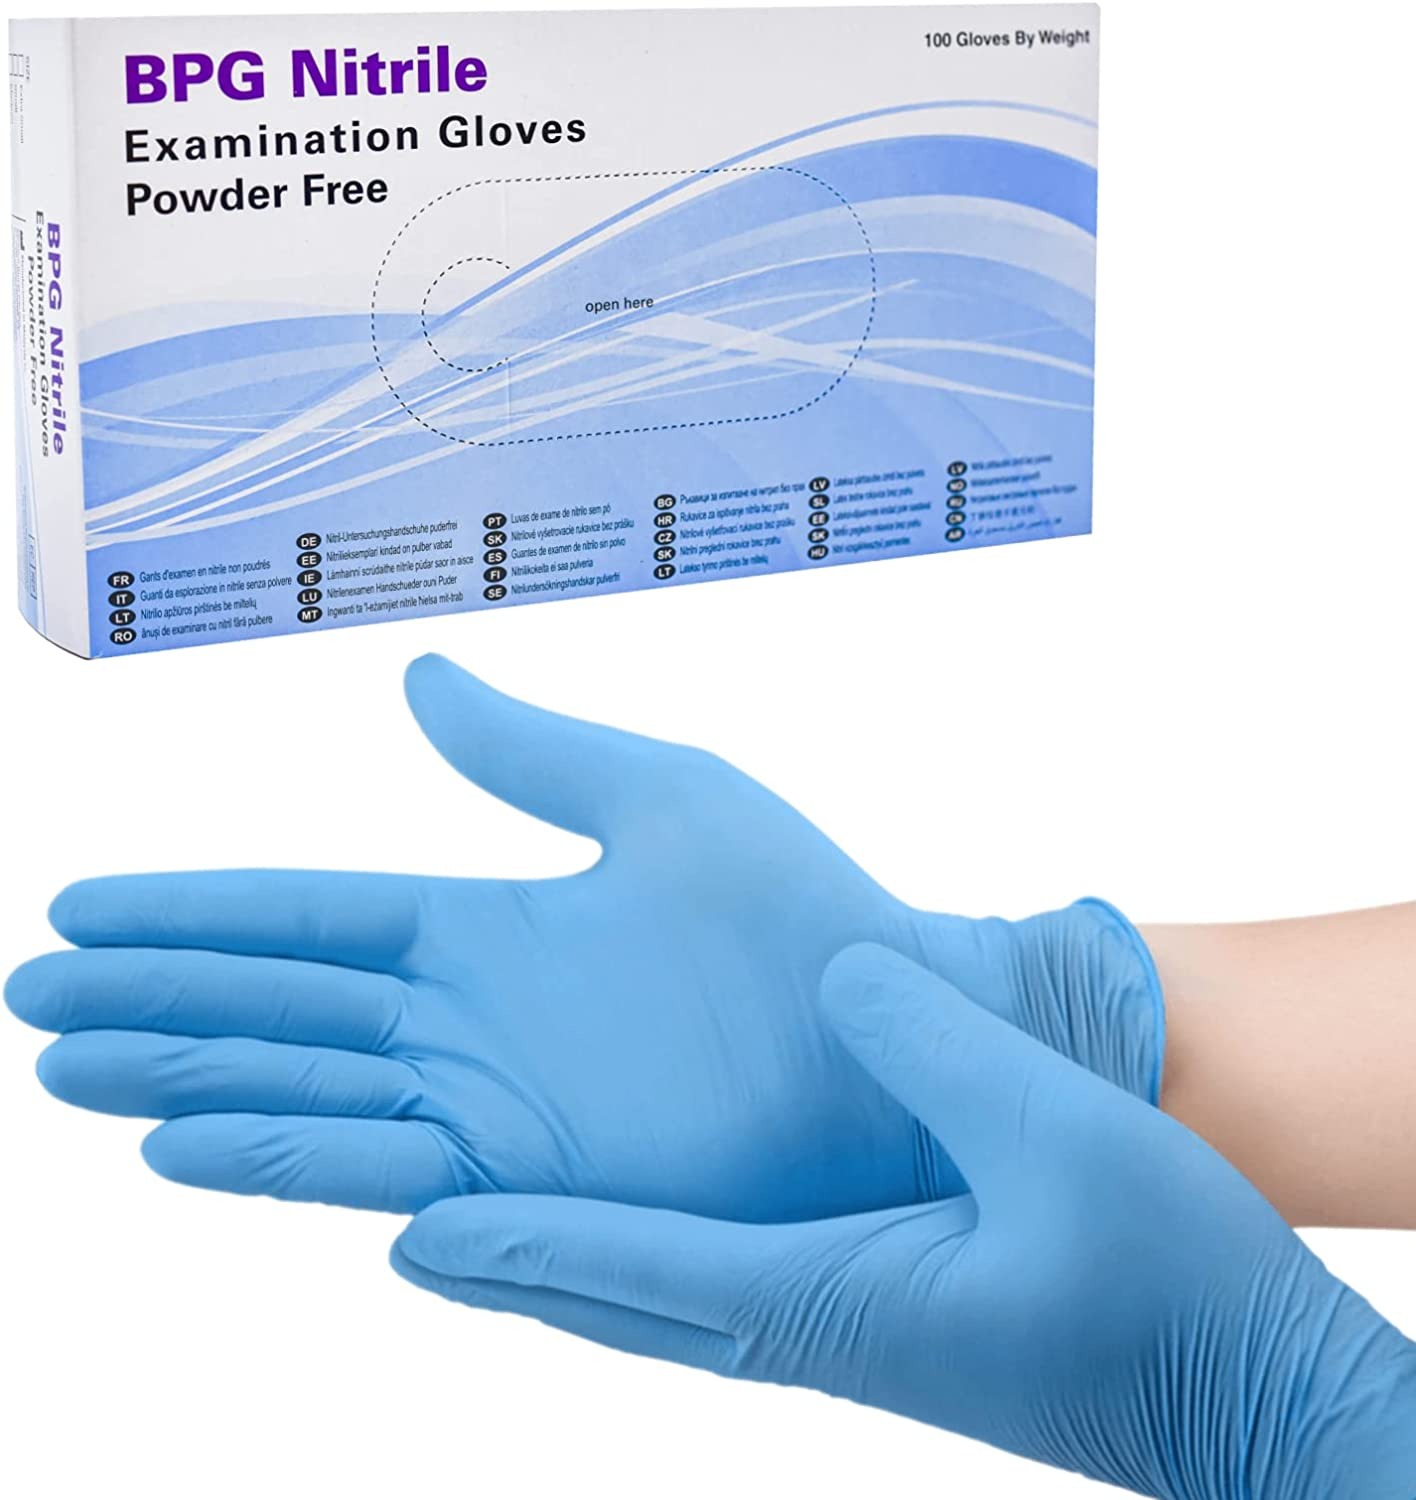 BPG Nitrile Examination Gloves Powder Free 100pcs | Medium size